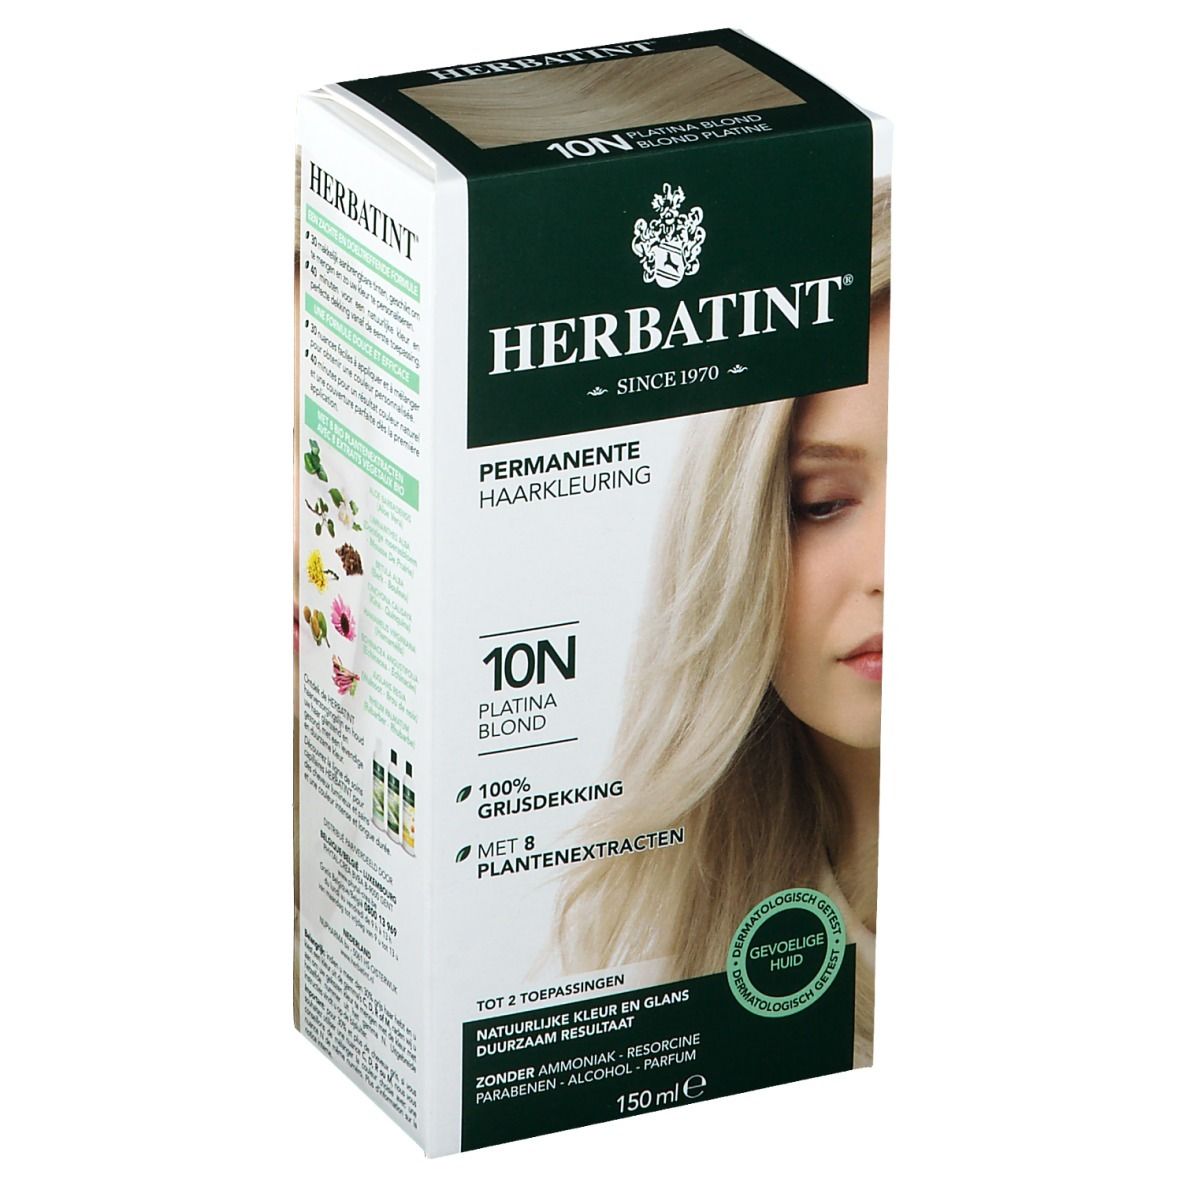 Herbatint Soin Colorant Permanent Blond Platin 10N